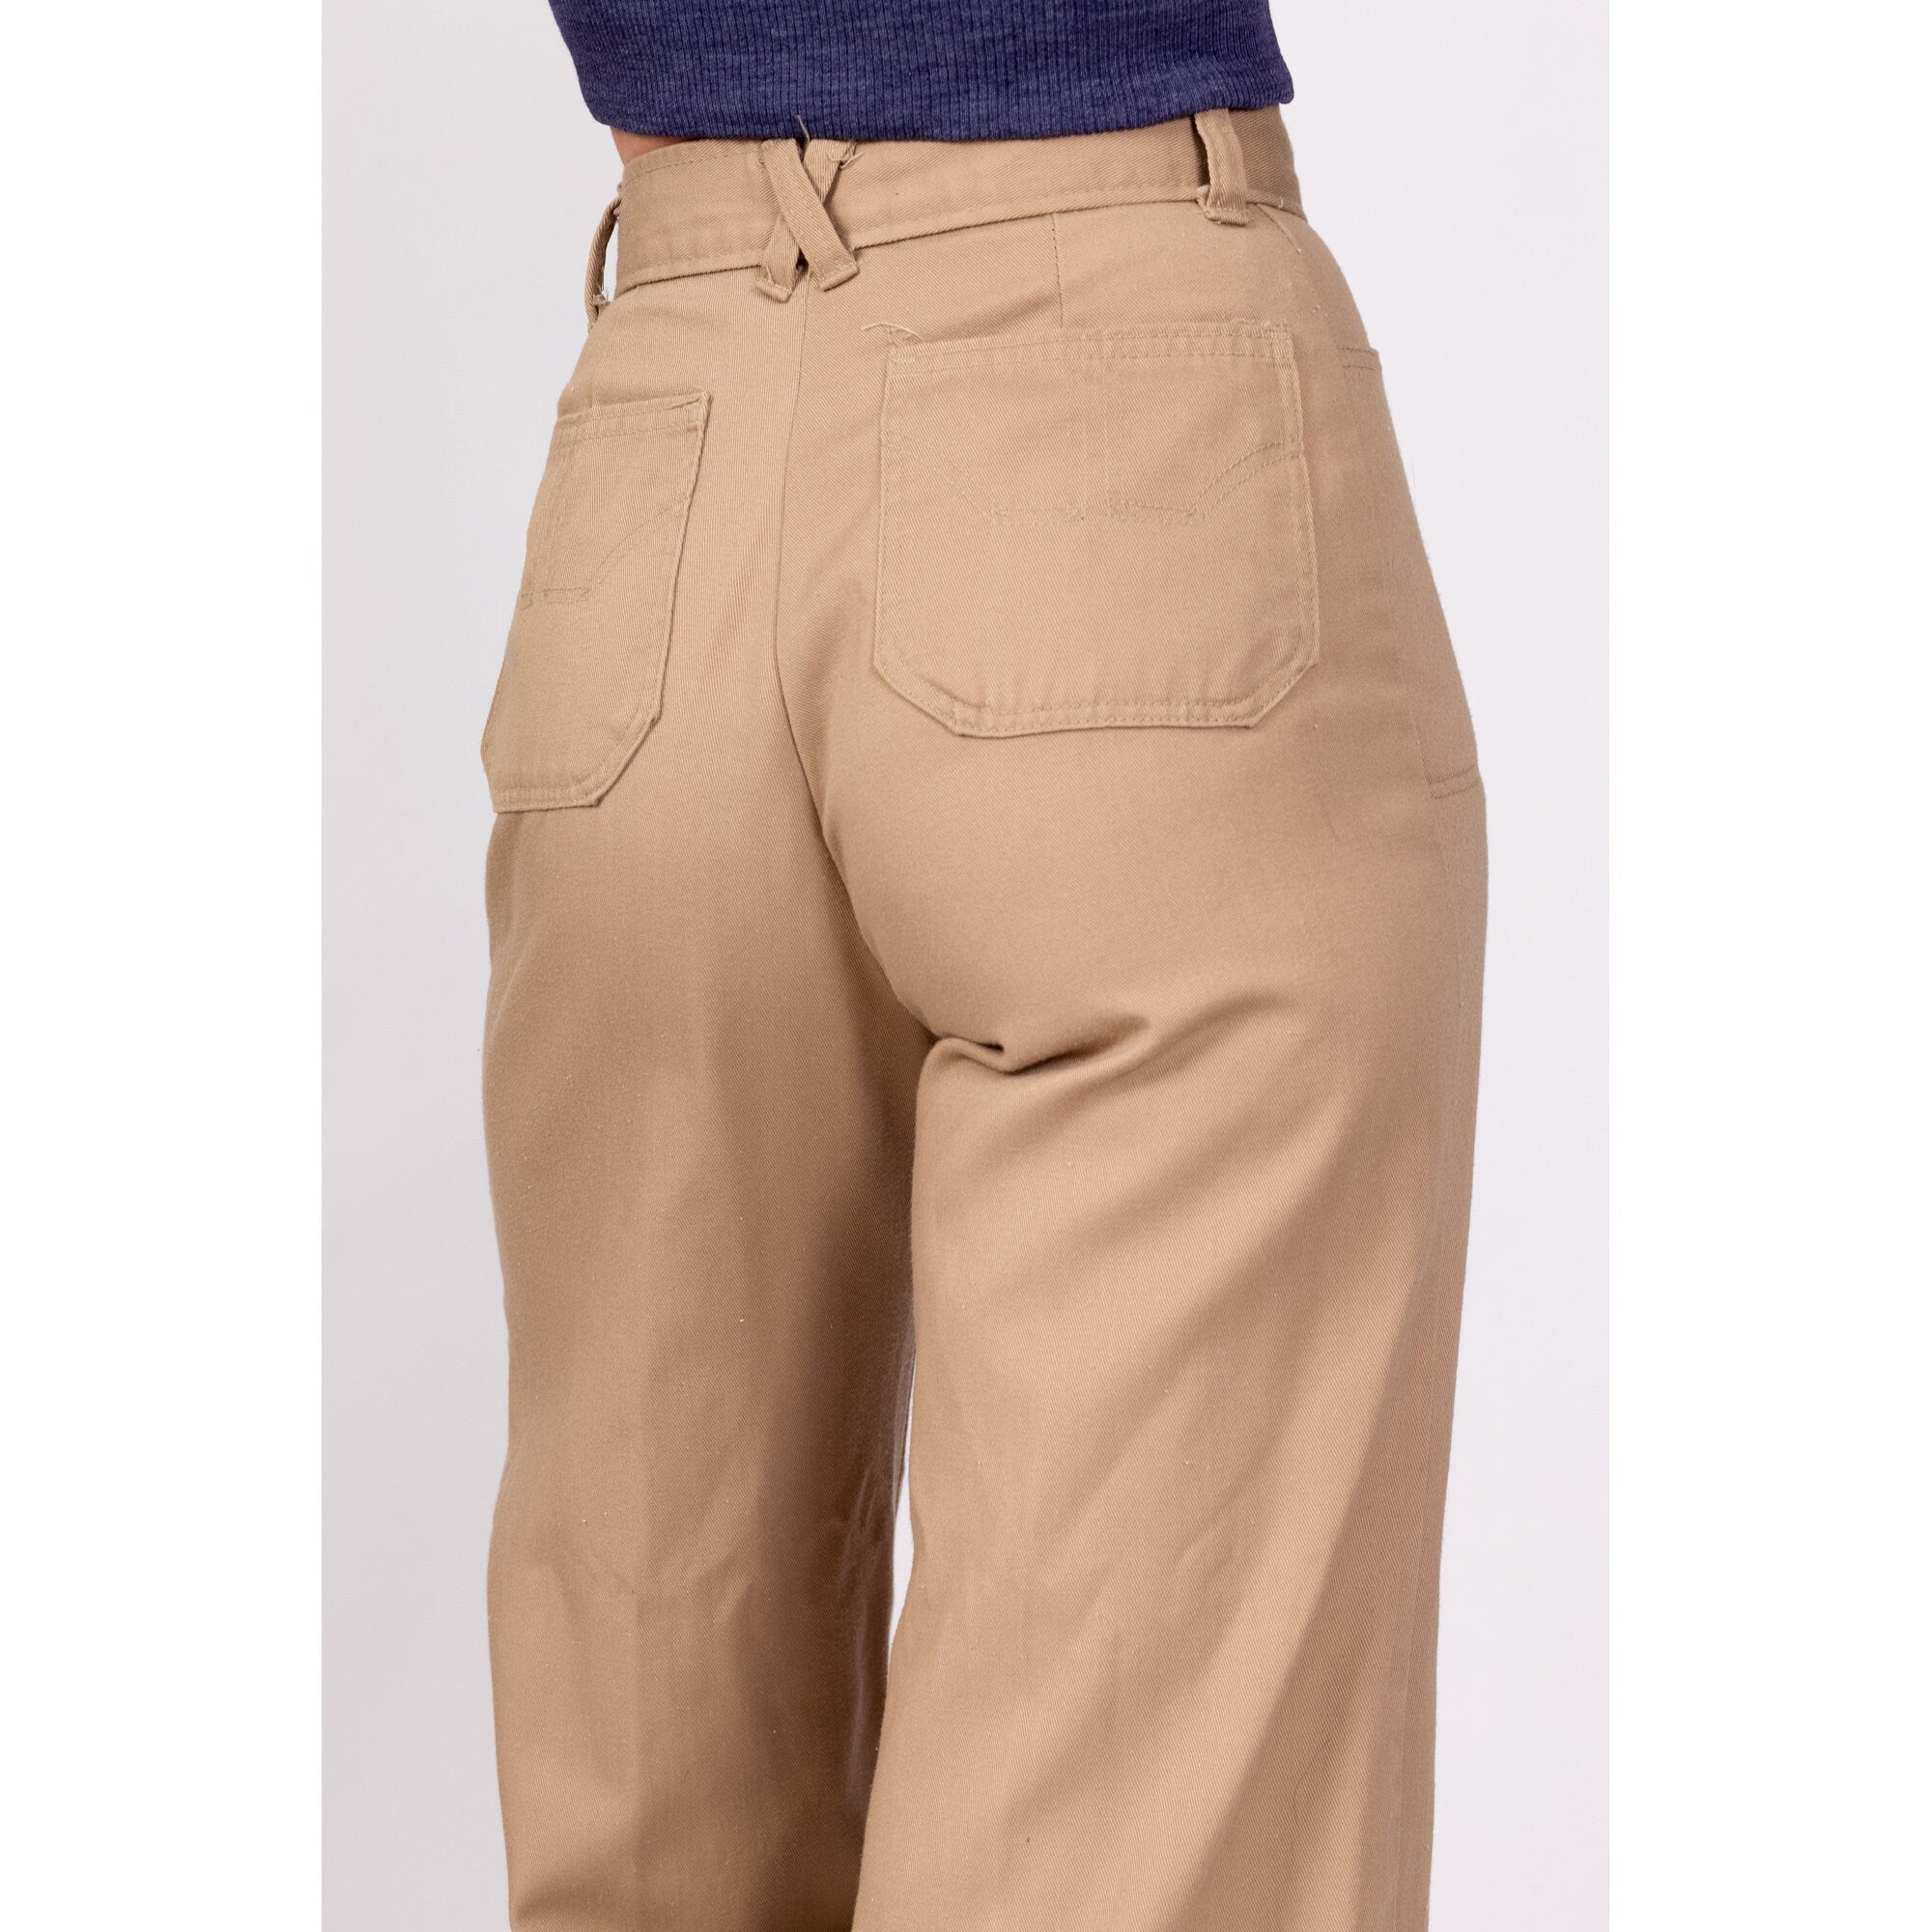 70s High Waisted Khaki Twill Flared Pants - Extra Small, 24